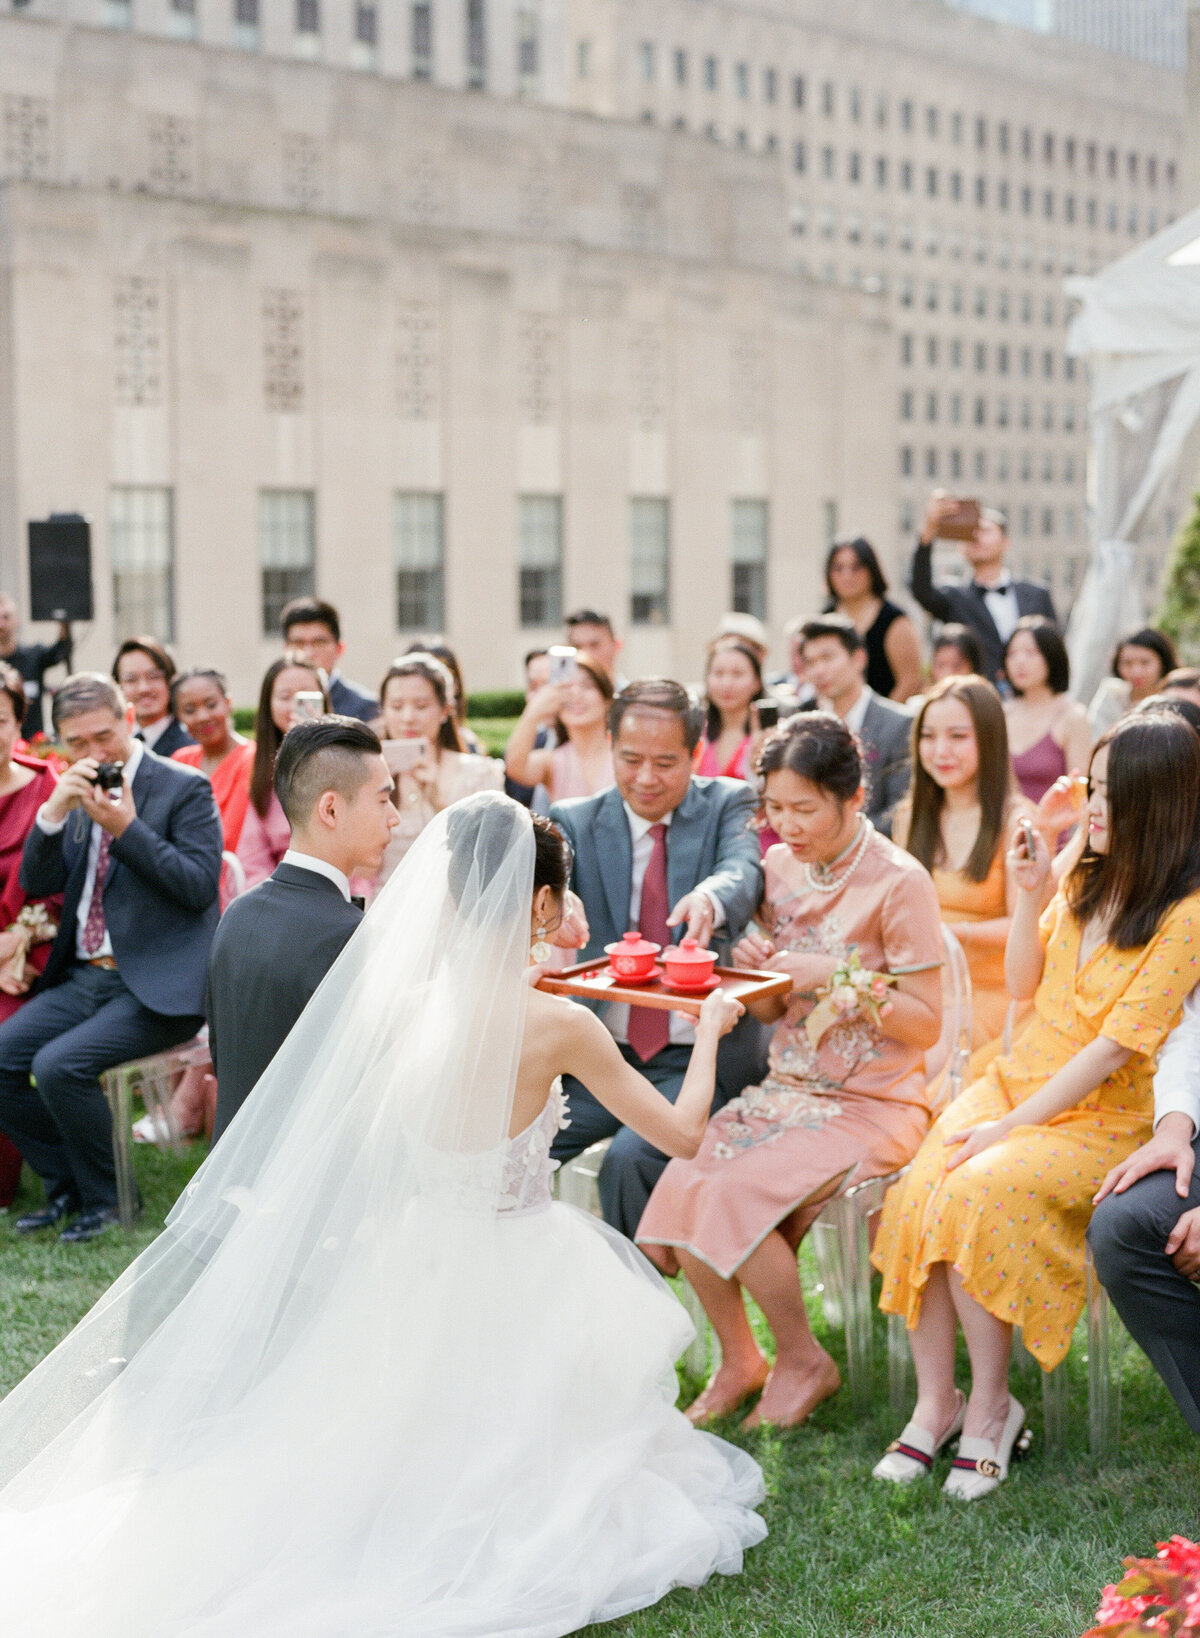 Chinese tea ceremony at New York wedding